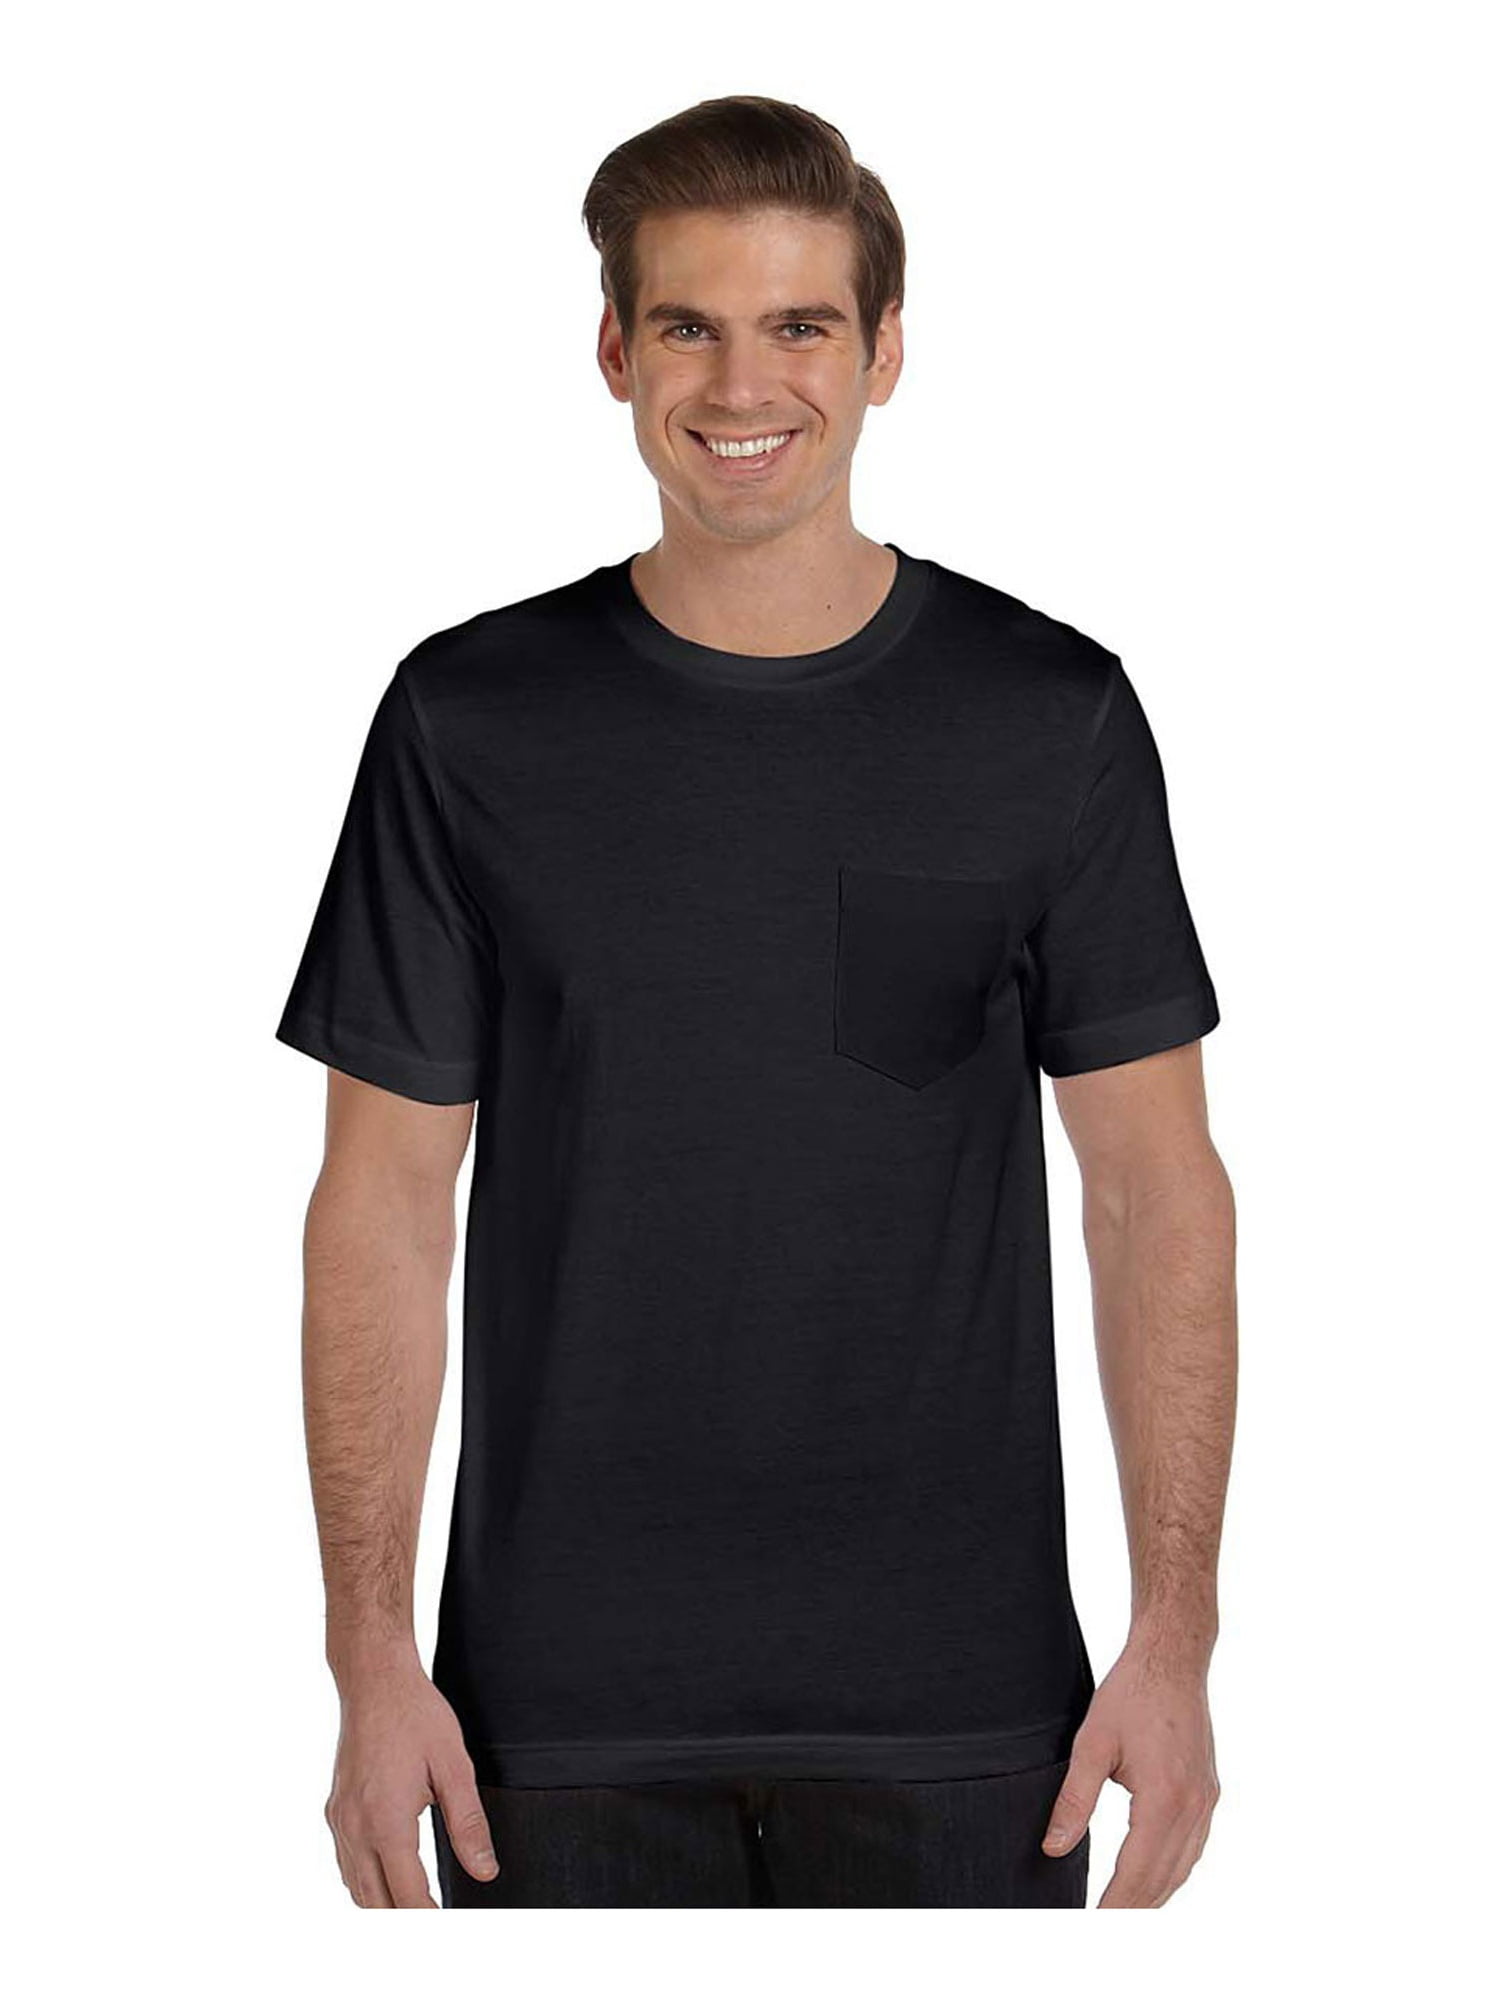 Bella Canvas Men’s Fitted Jersey Pocket T-Shirt, Style C3021 - Walmart.com